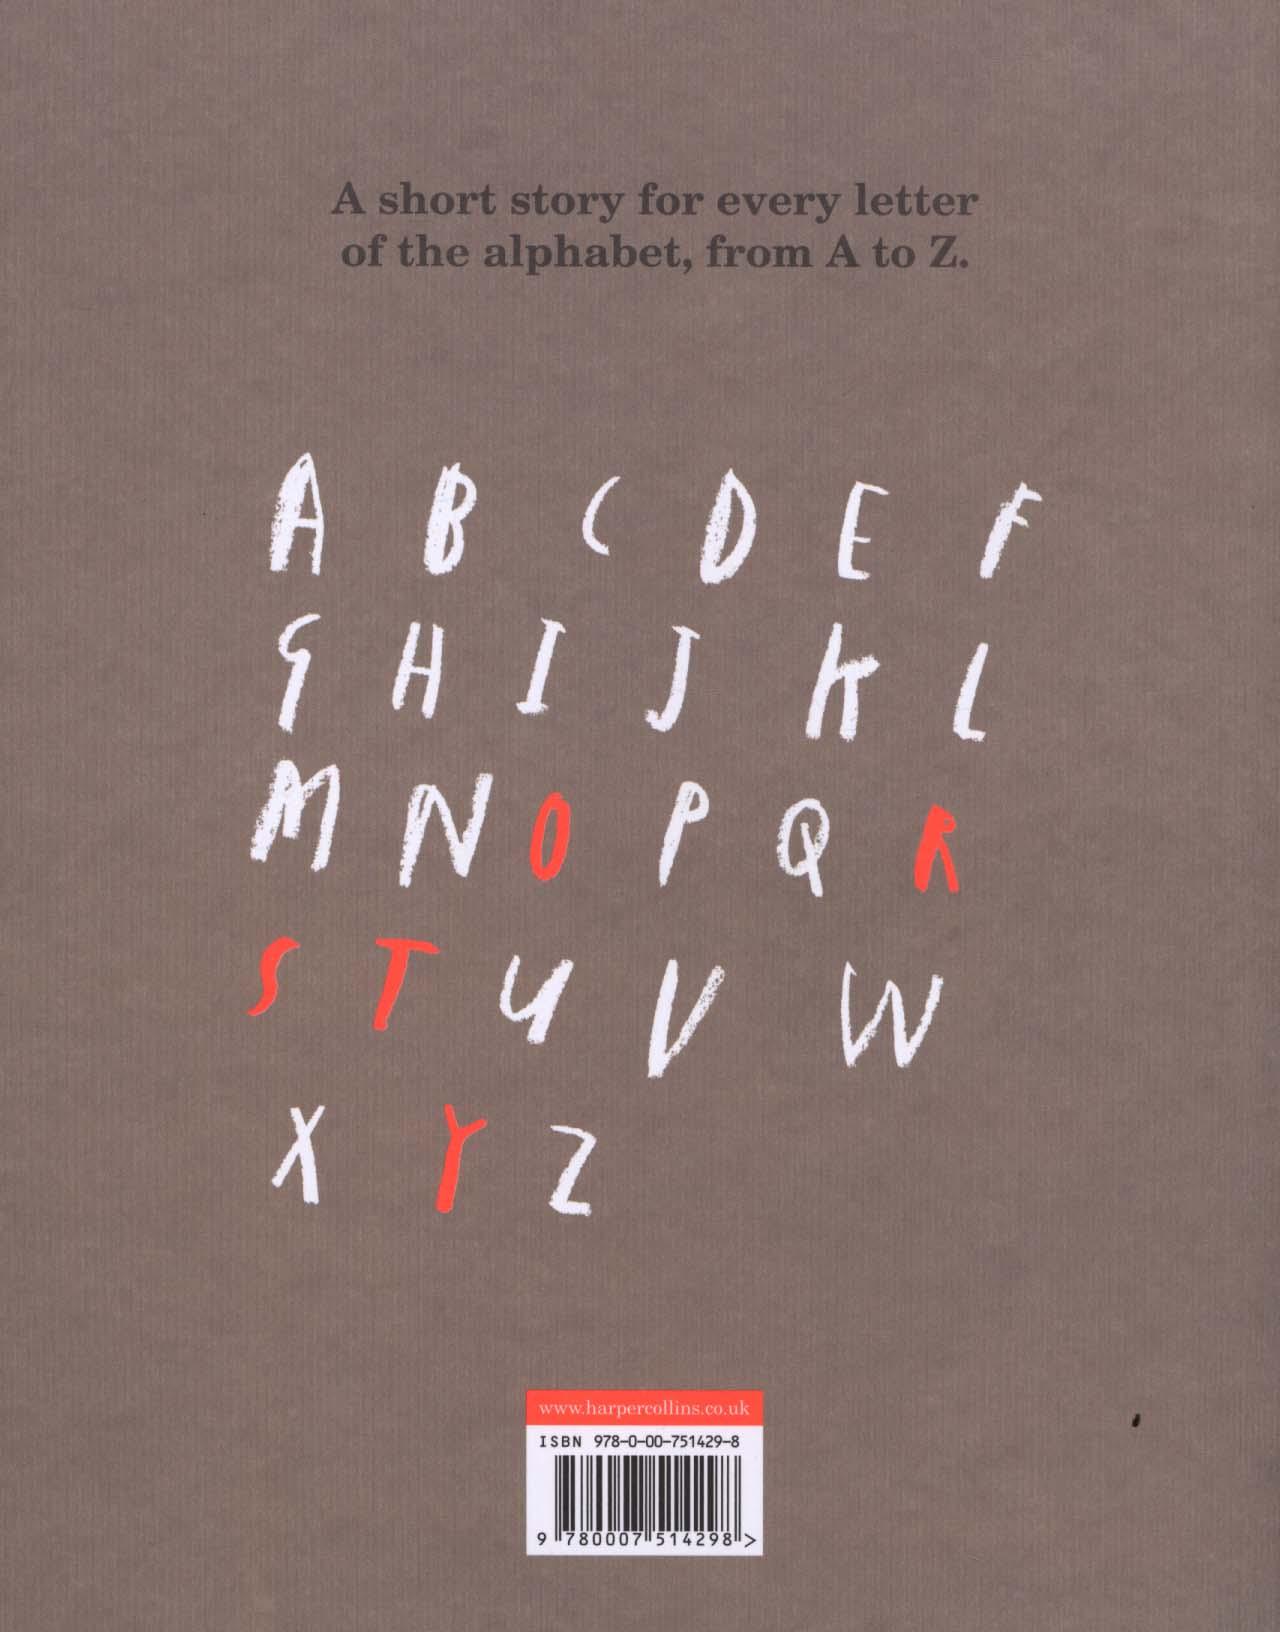 Alphabet of Stories